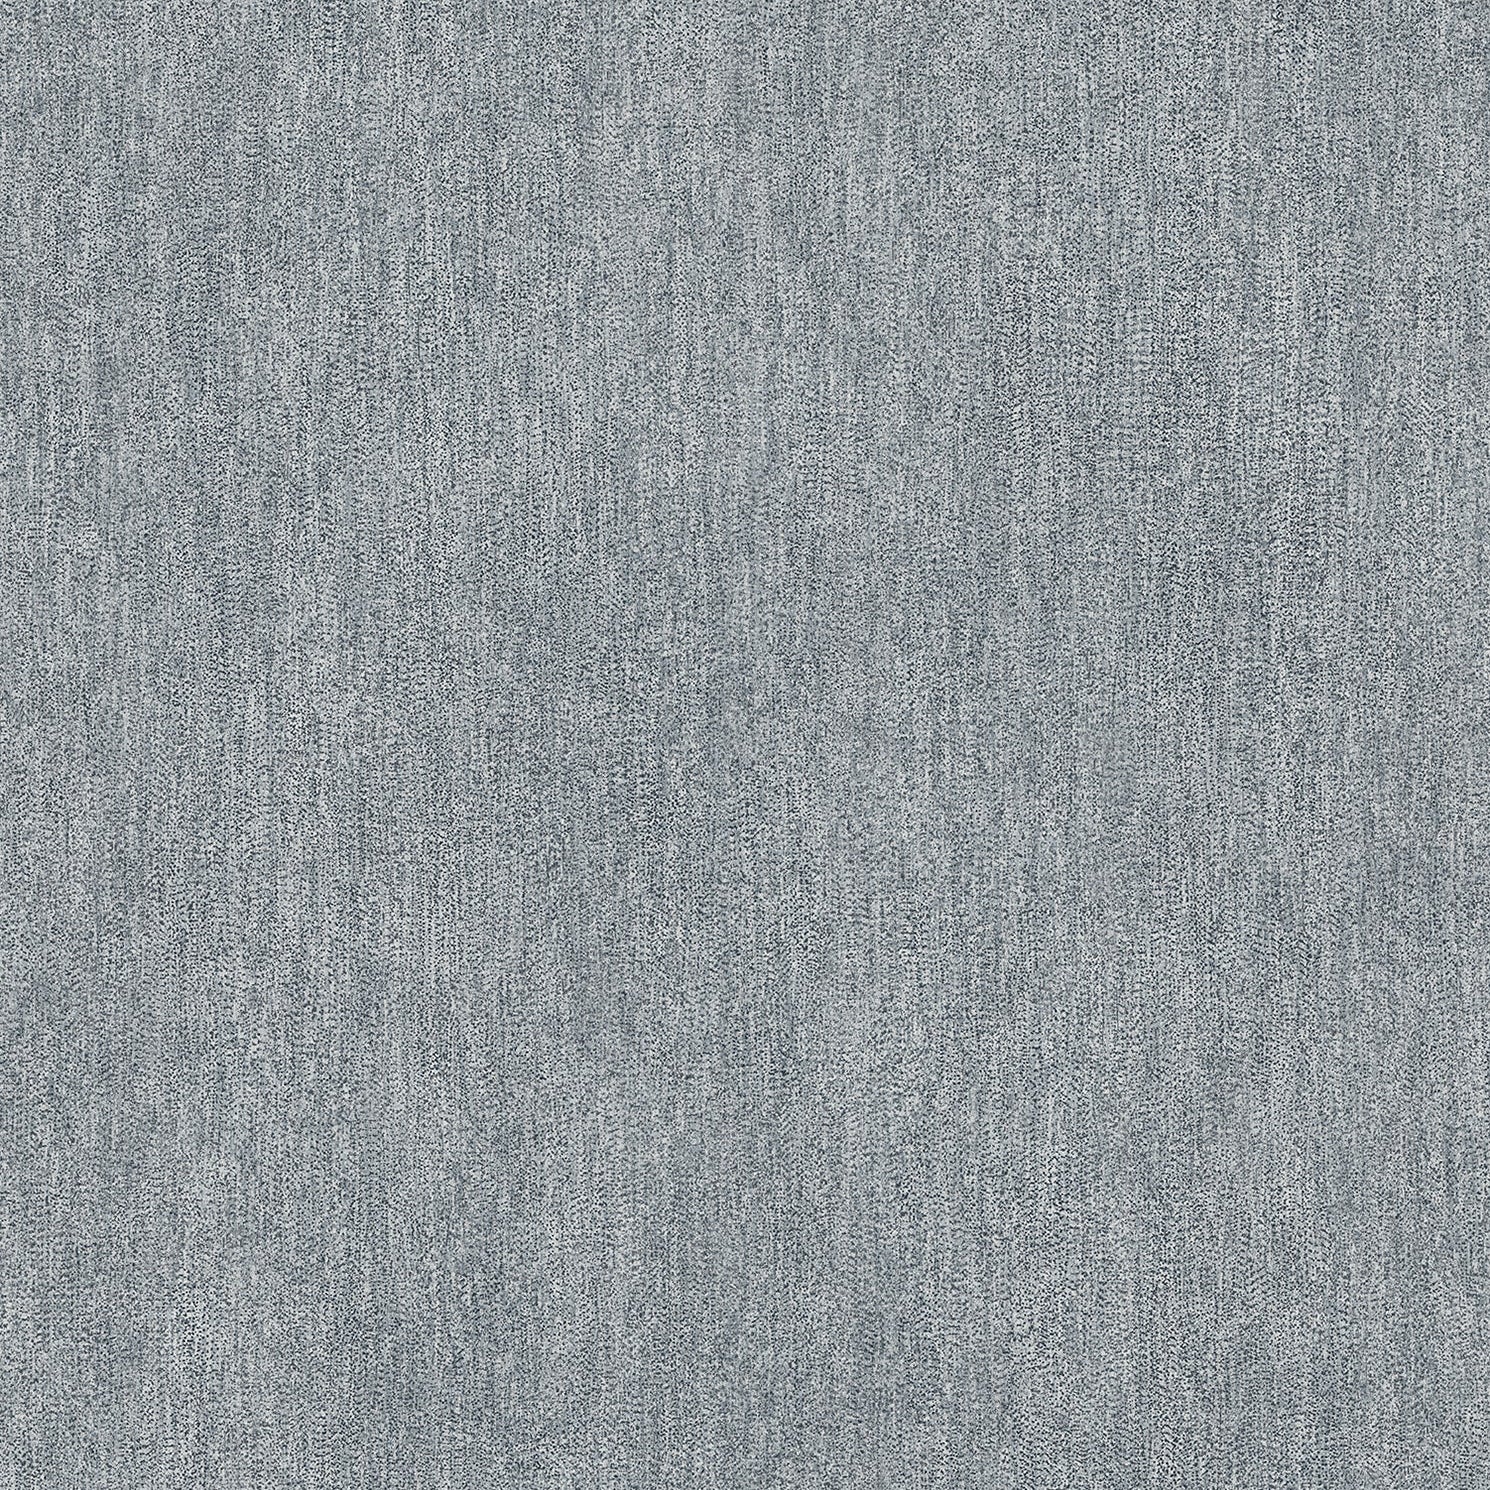 Buy 4020-09109 Geo & Textures Arlo Light Grey Speckle Light Grey by Advantage